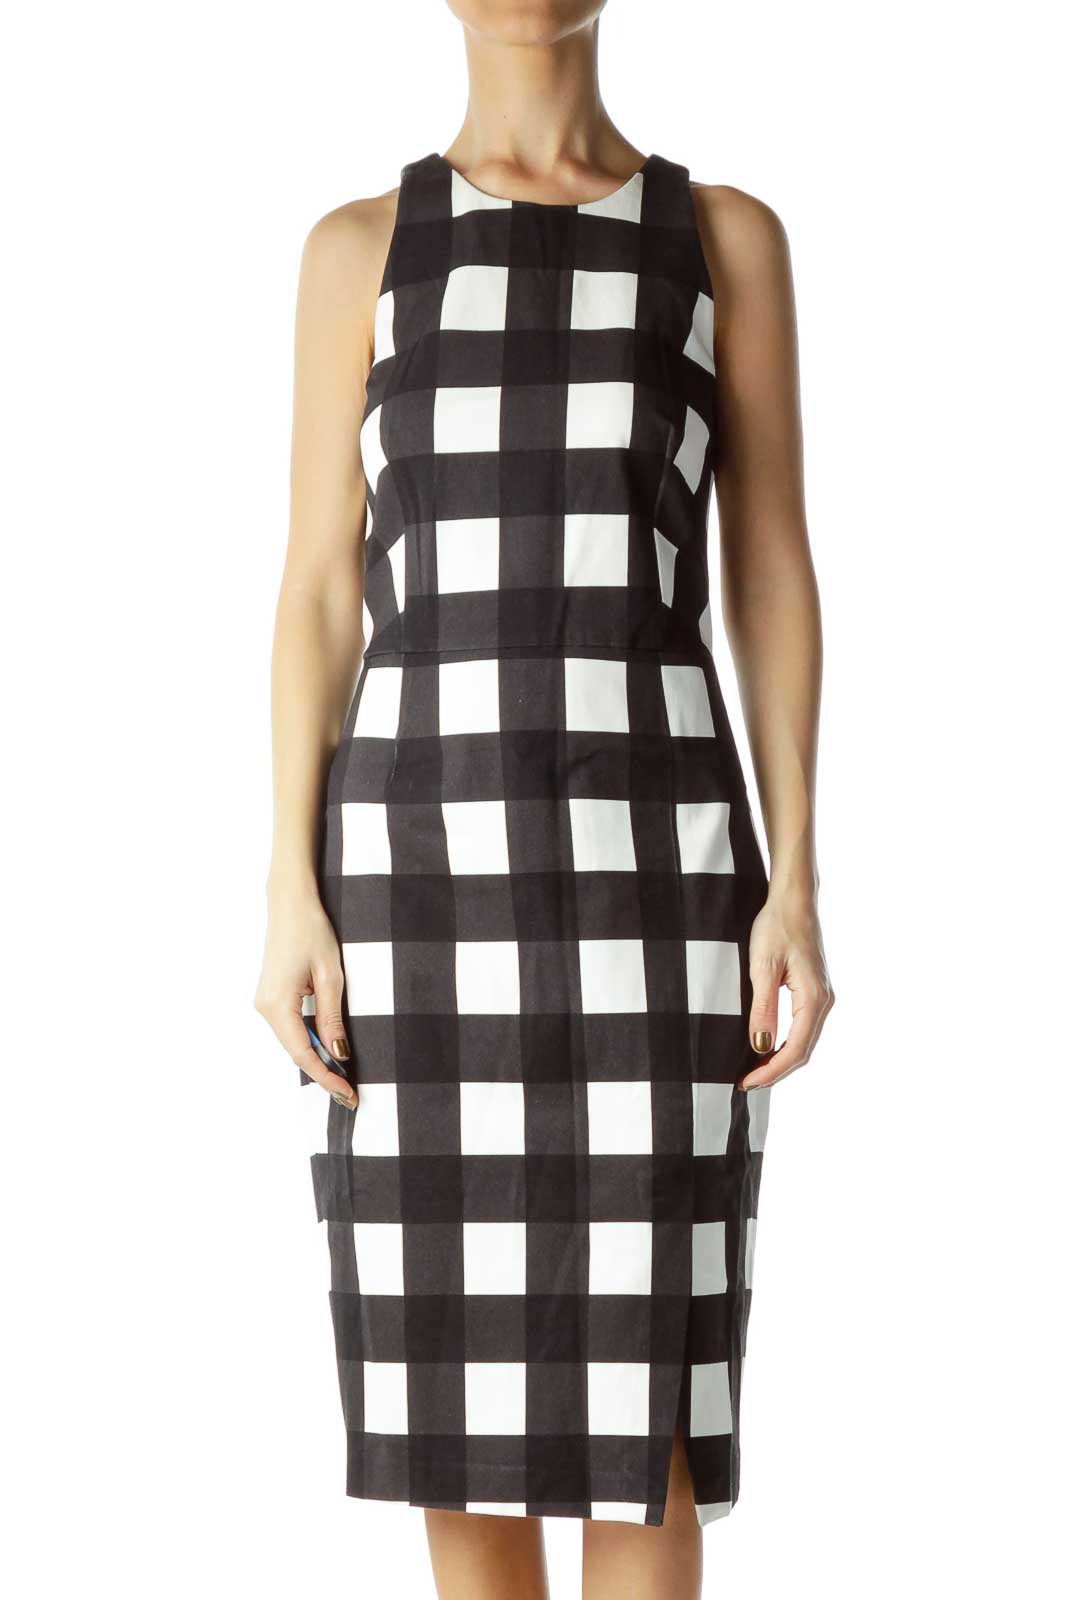 Black Checkered Sheath Dress Front